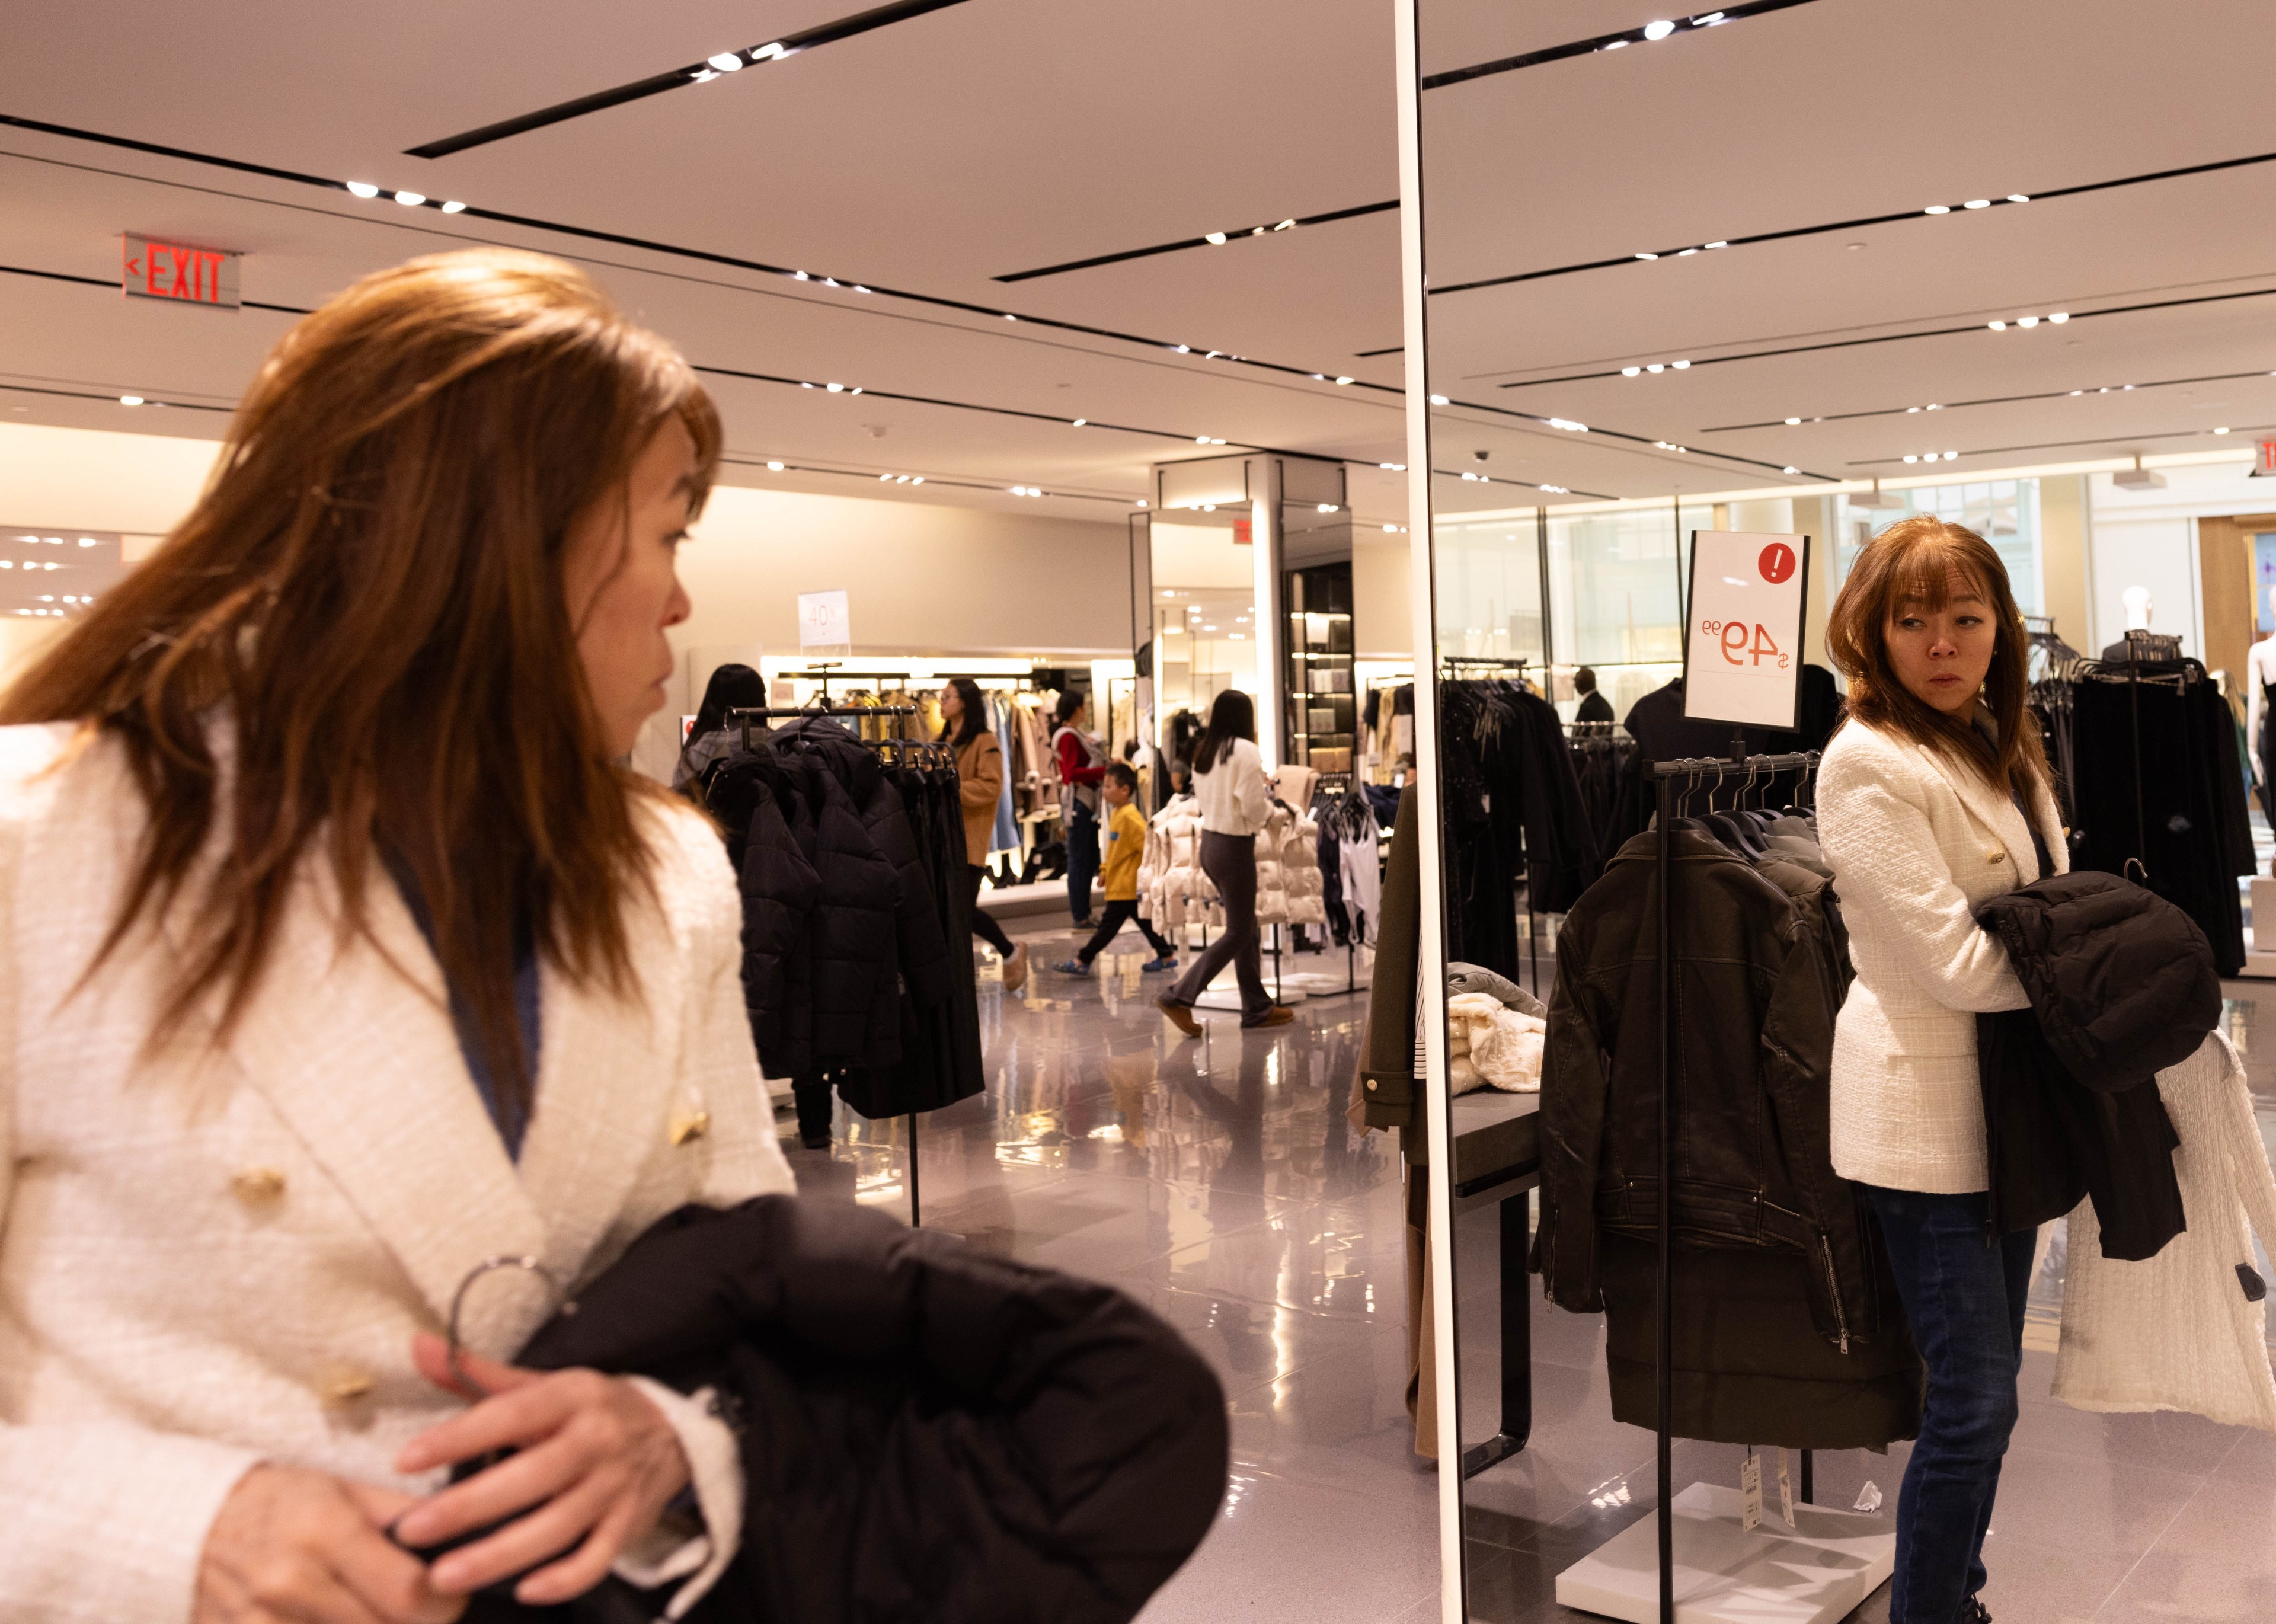 A shopper looks in a mirror inside Stonestown Galleria's Zara.